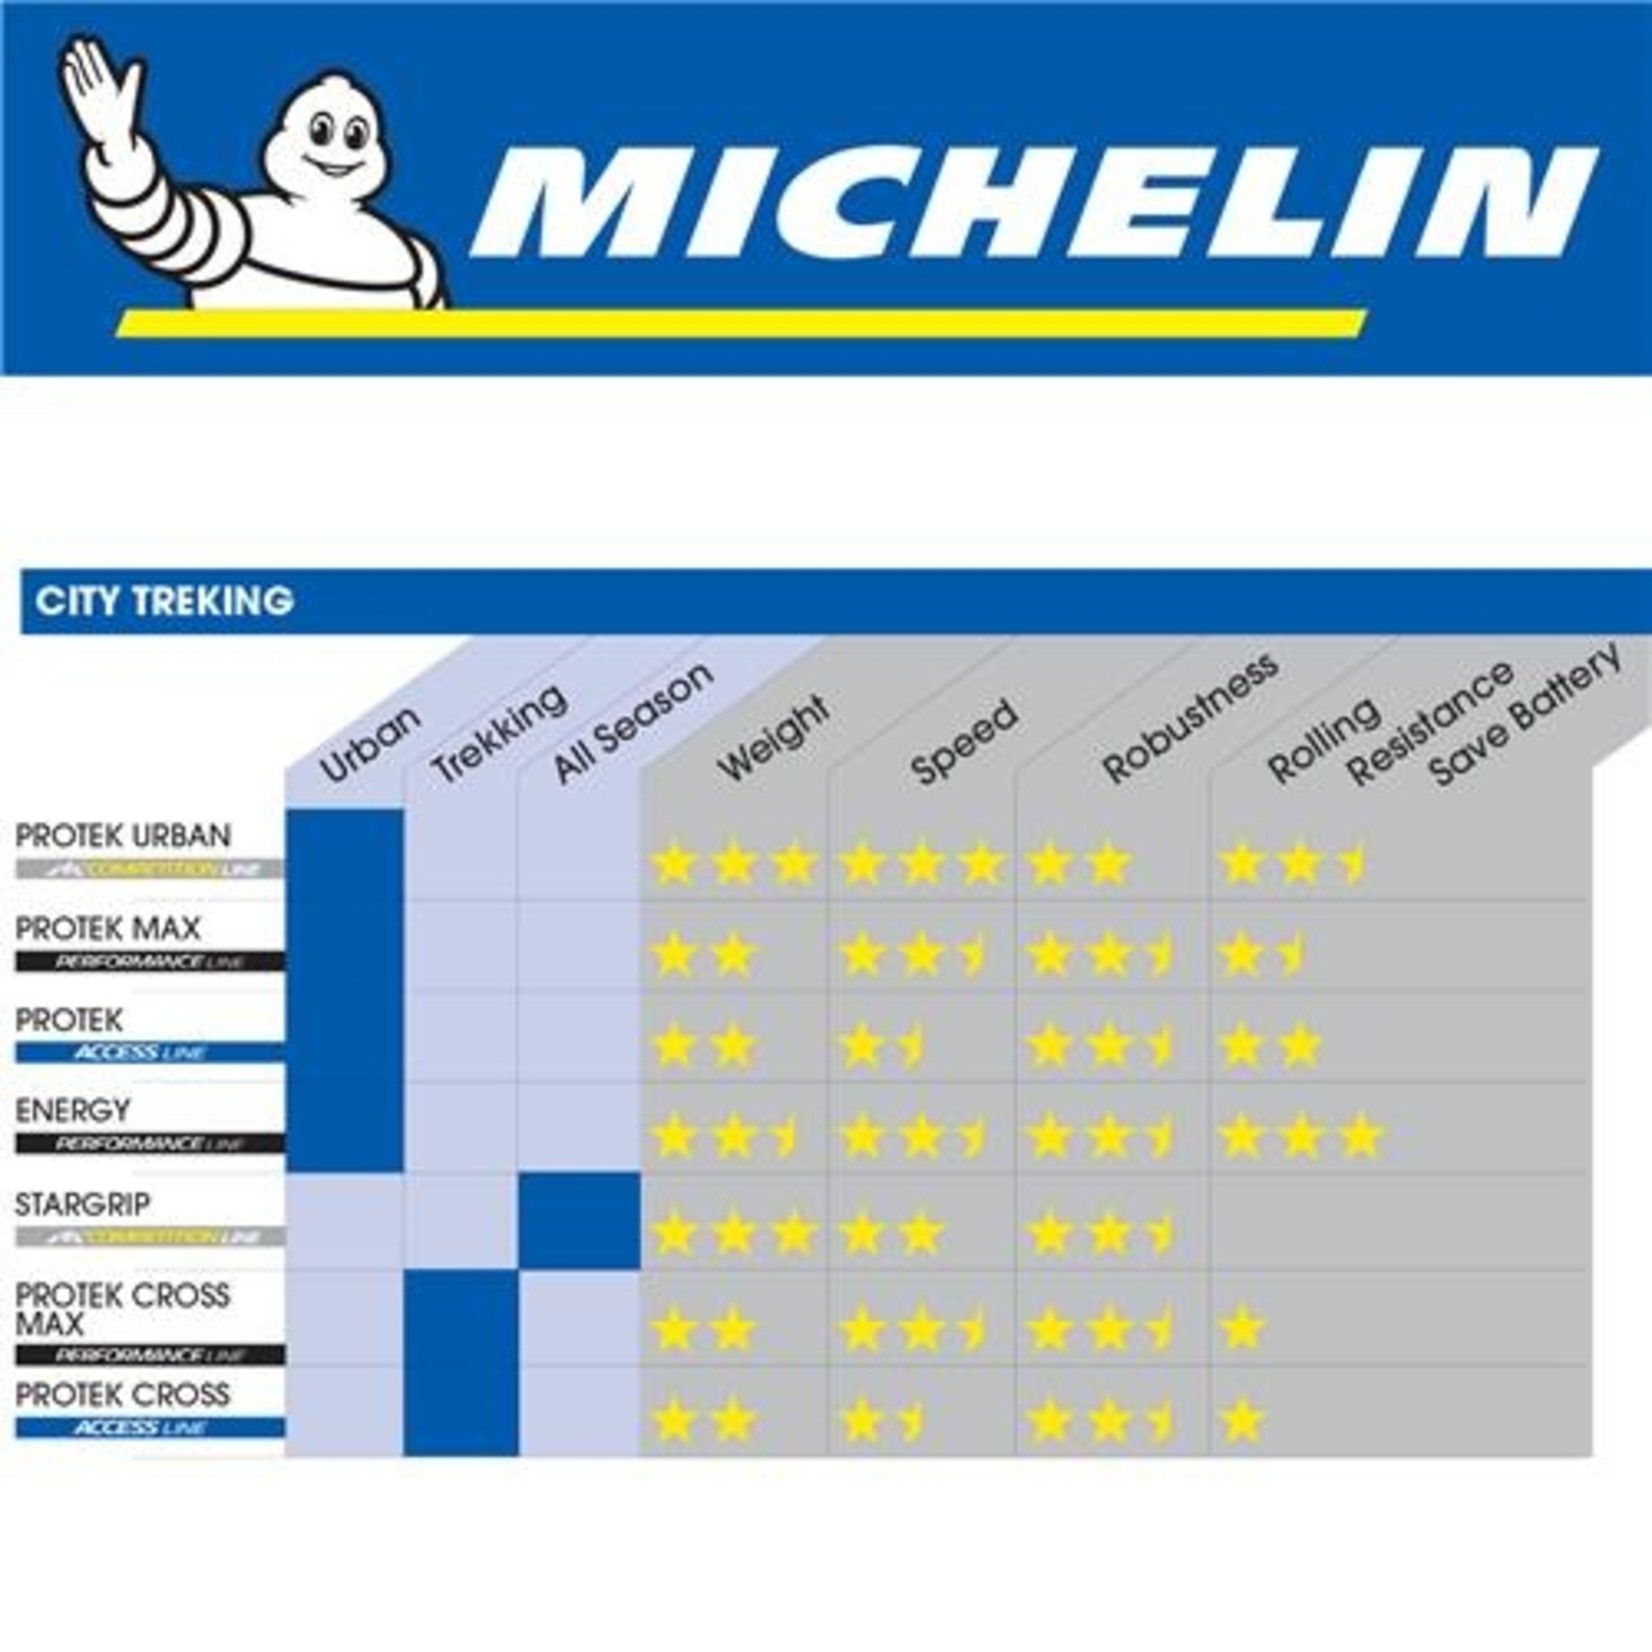 Michelin Michelin Bike Tyre - Protek - 700 X 40C - Wire Bead - Bicycle Tyre - Pair